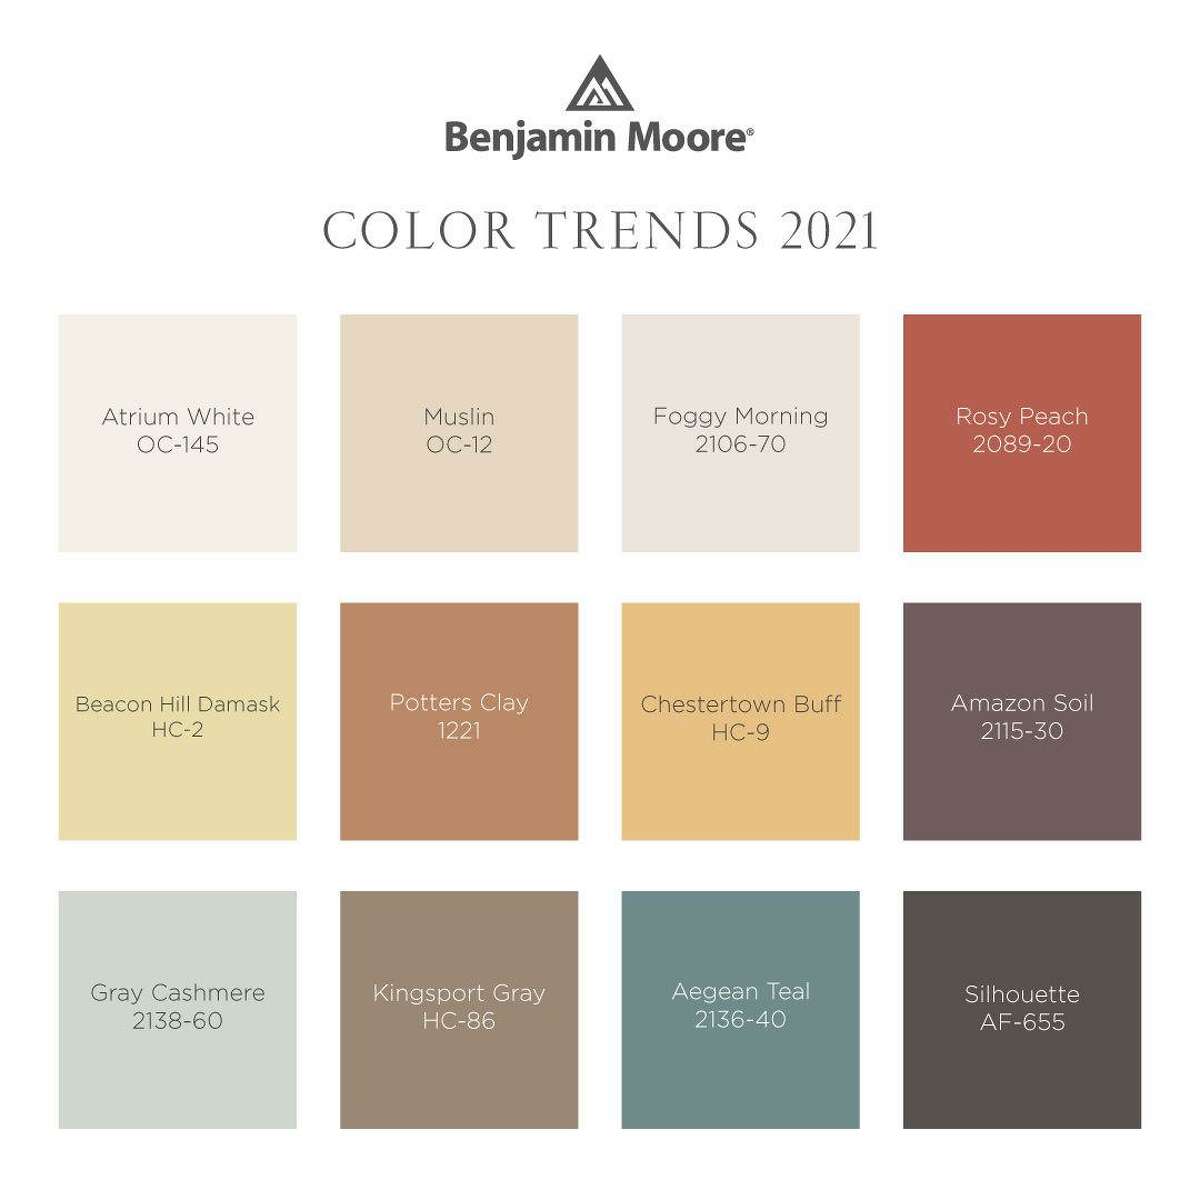 Benjamin Moore's 2021 Color of the Year brings a sense of calm